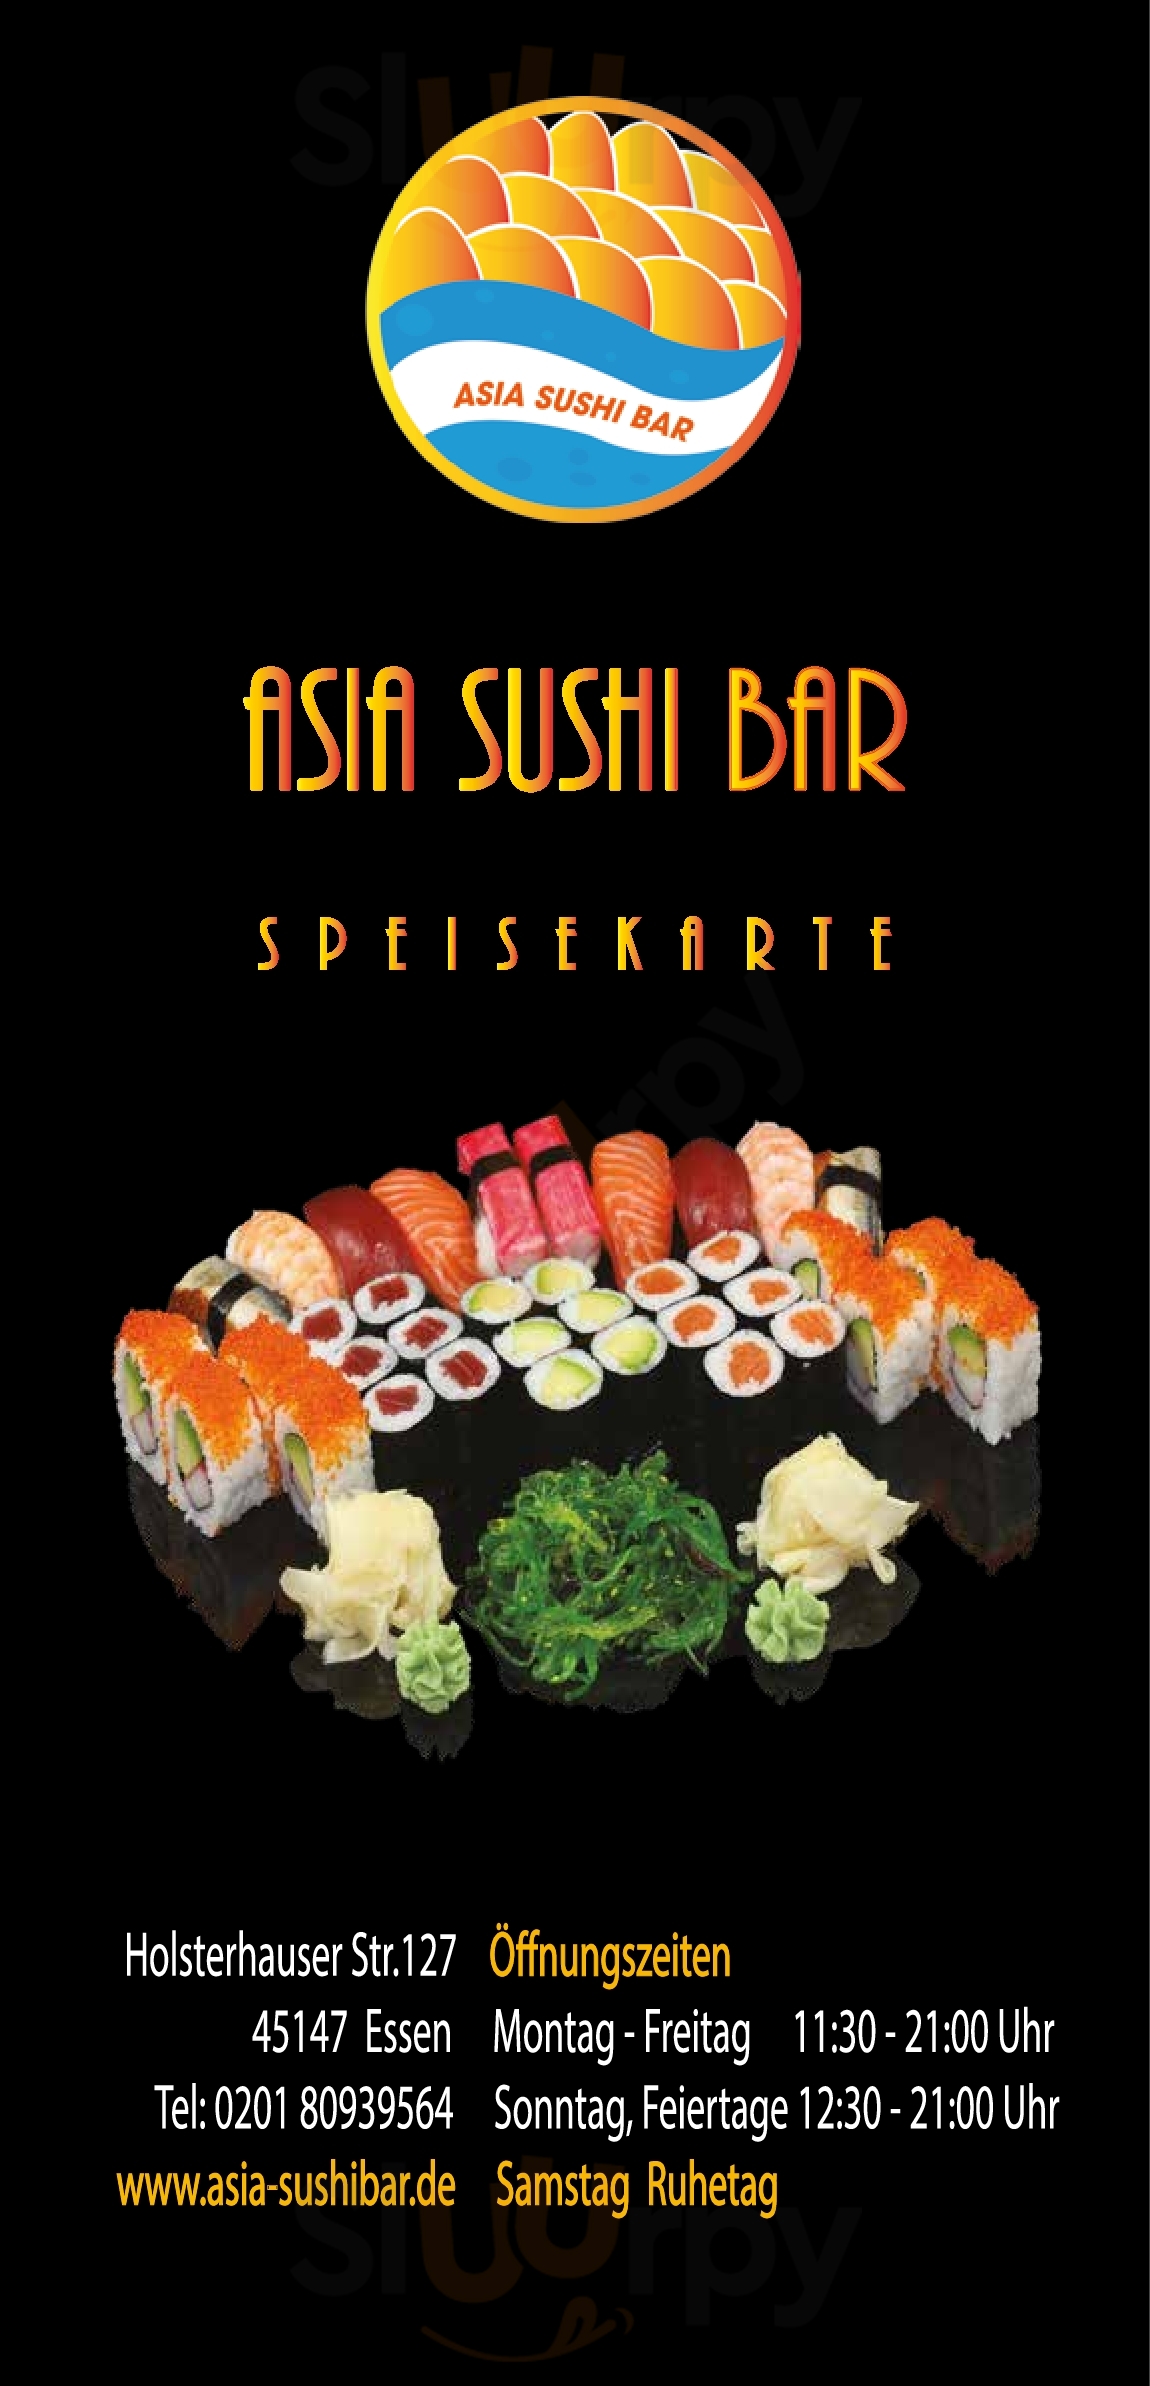 Asia Sushi Bar Essen Menu - 1